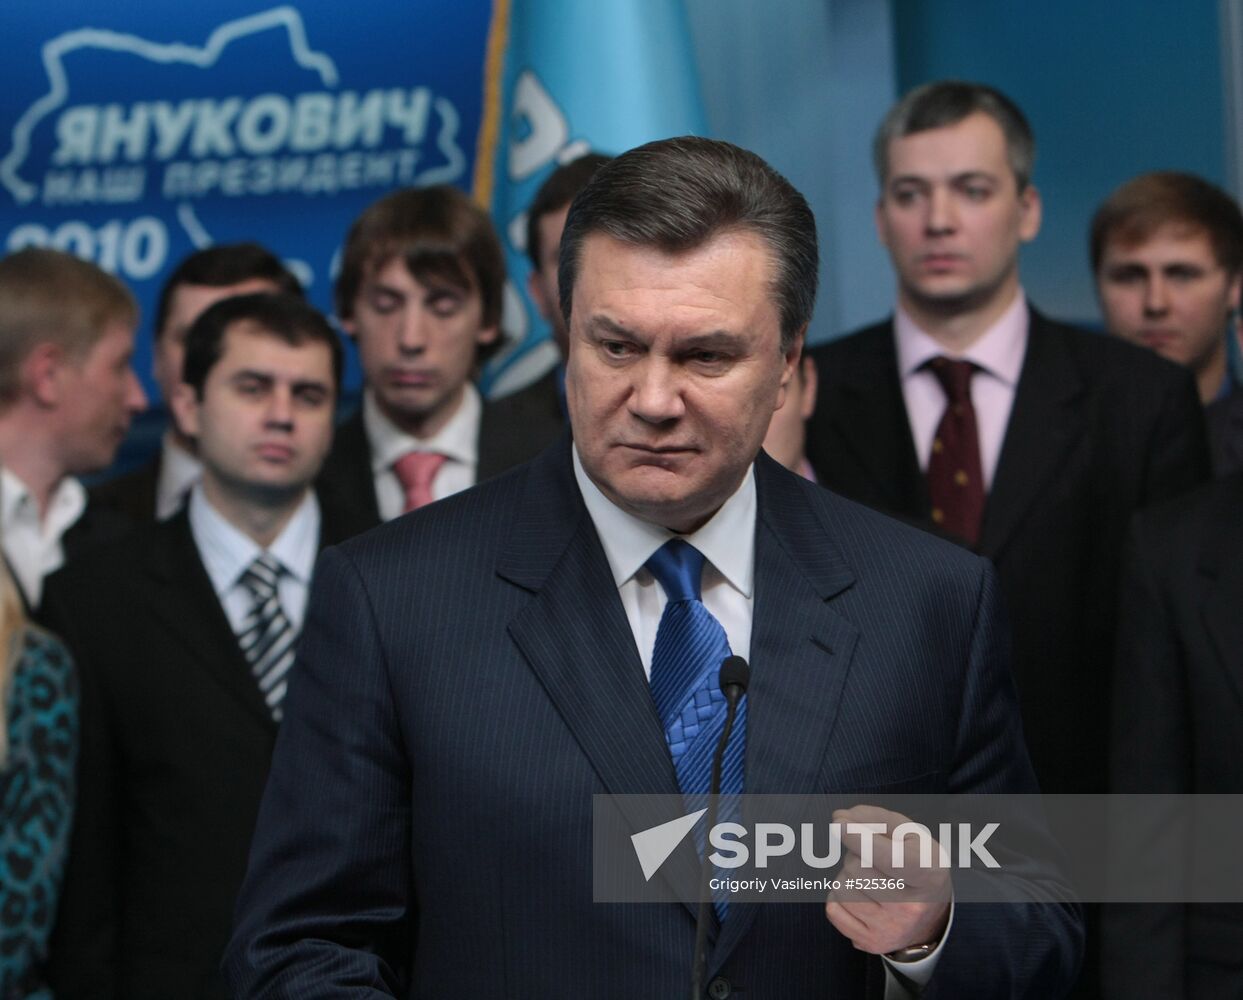 Viktor Yanukovich attends Ukraine Regions Youth Union congress